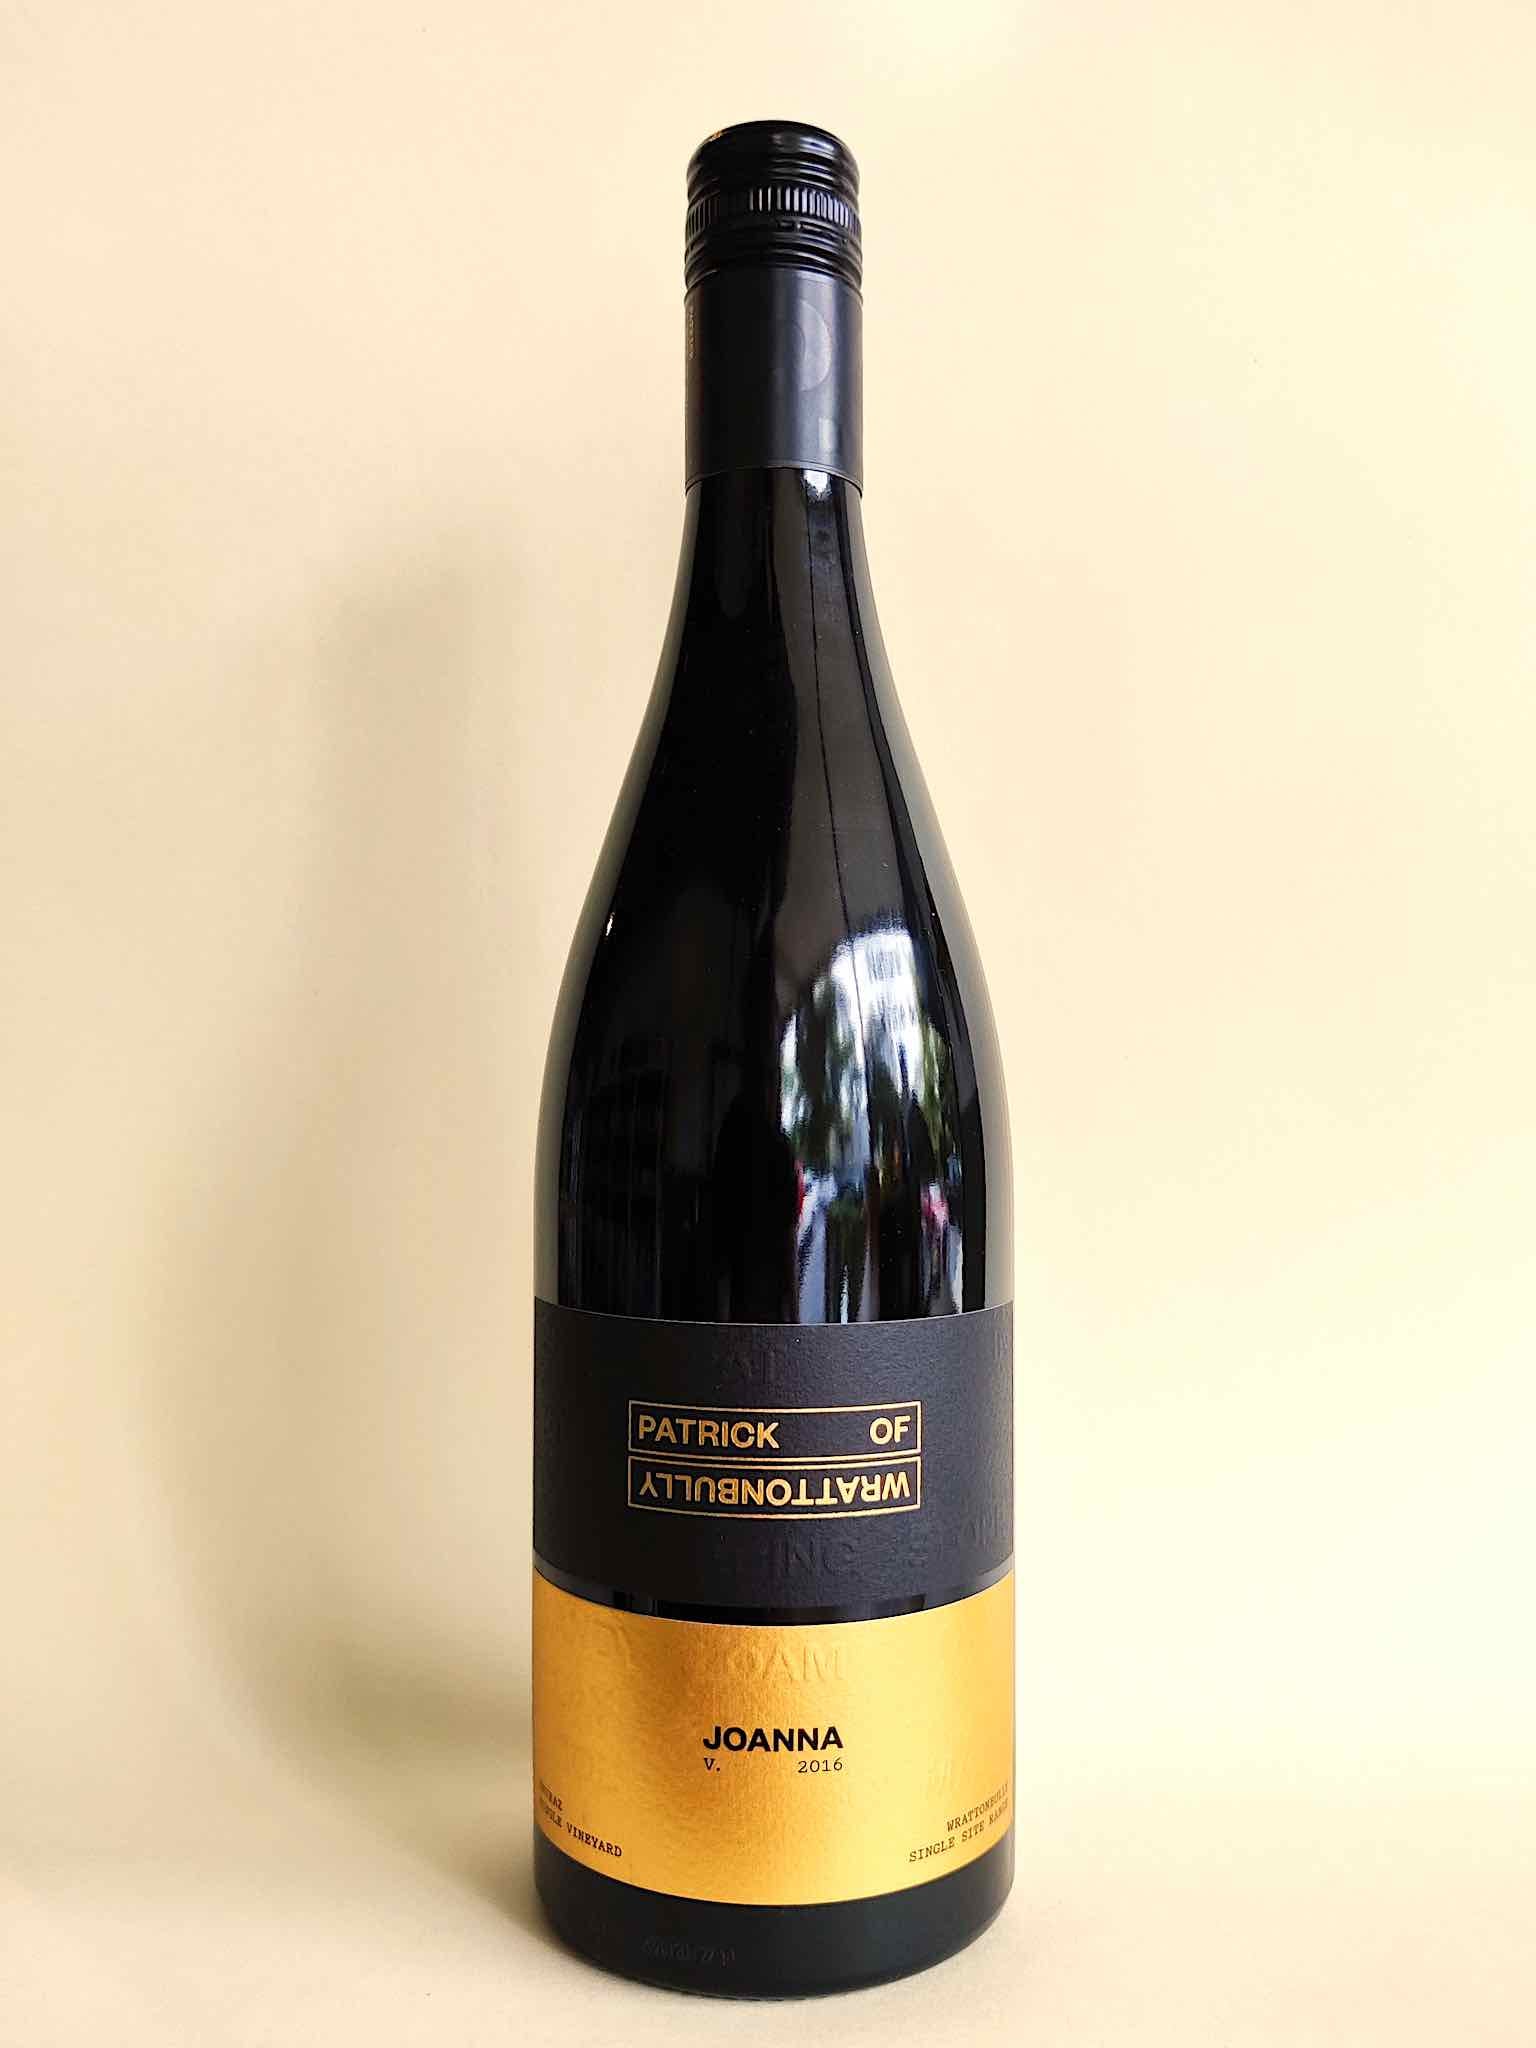 A bottle of Patrick of Coonawarra "Joanna" single vineyard Shiraz from Wrattonbully, South Australia.